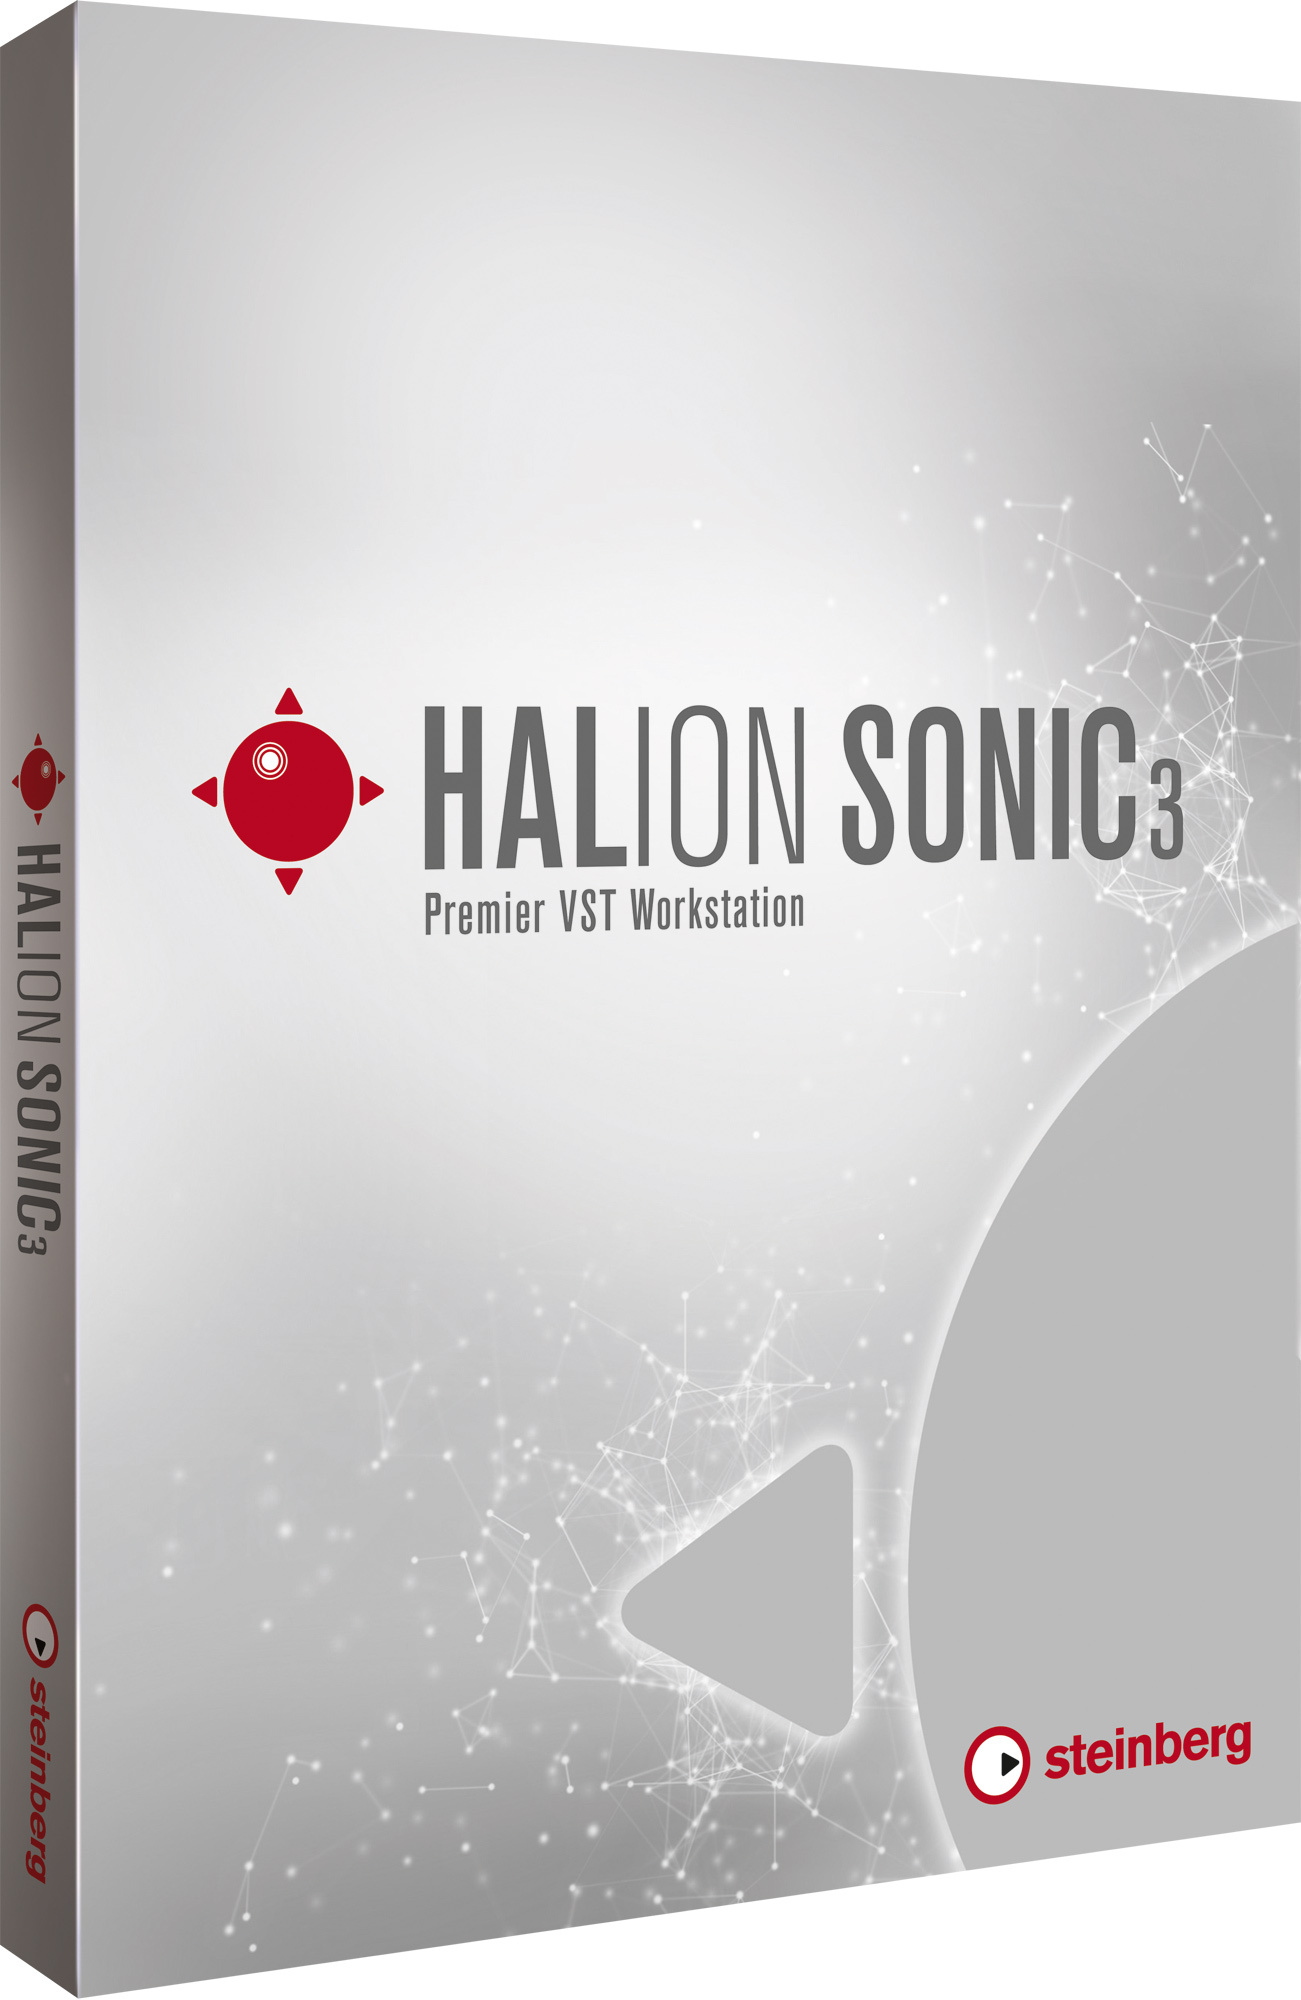 Steinberg Halion Sonic 3 - Sound Librerias y sample - Main picture